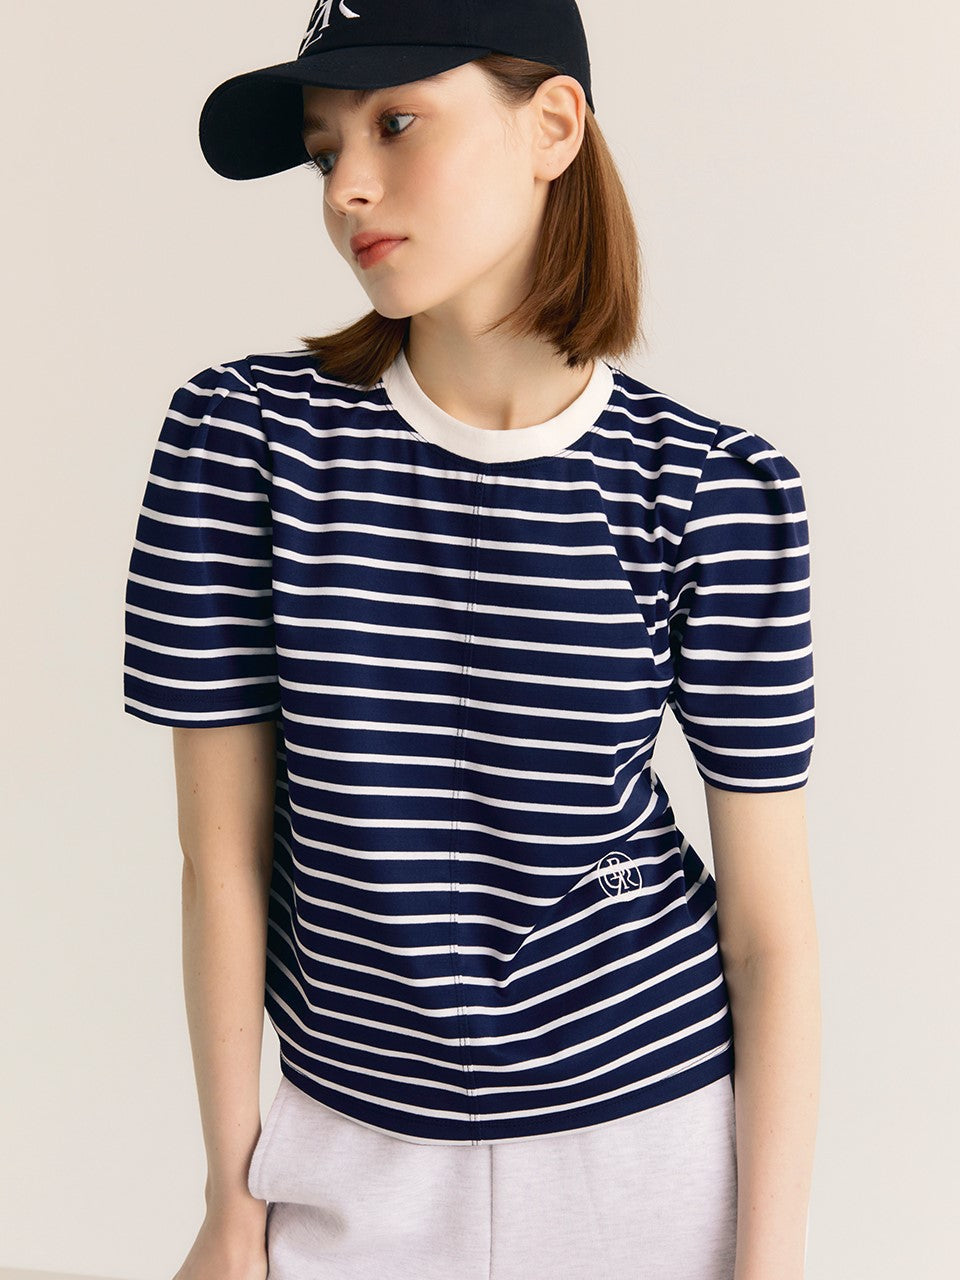 CITYBREEZE Puff Sleeve Striped T-shirt Navy (IZ*ONE MINJU’s Pick)